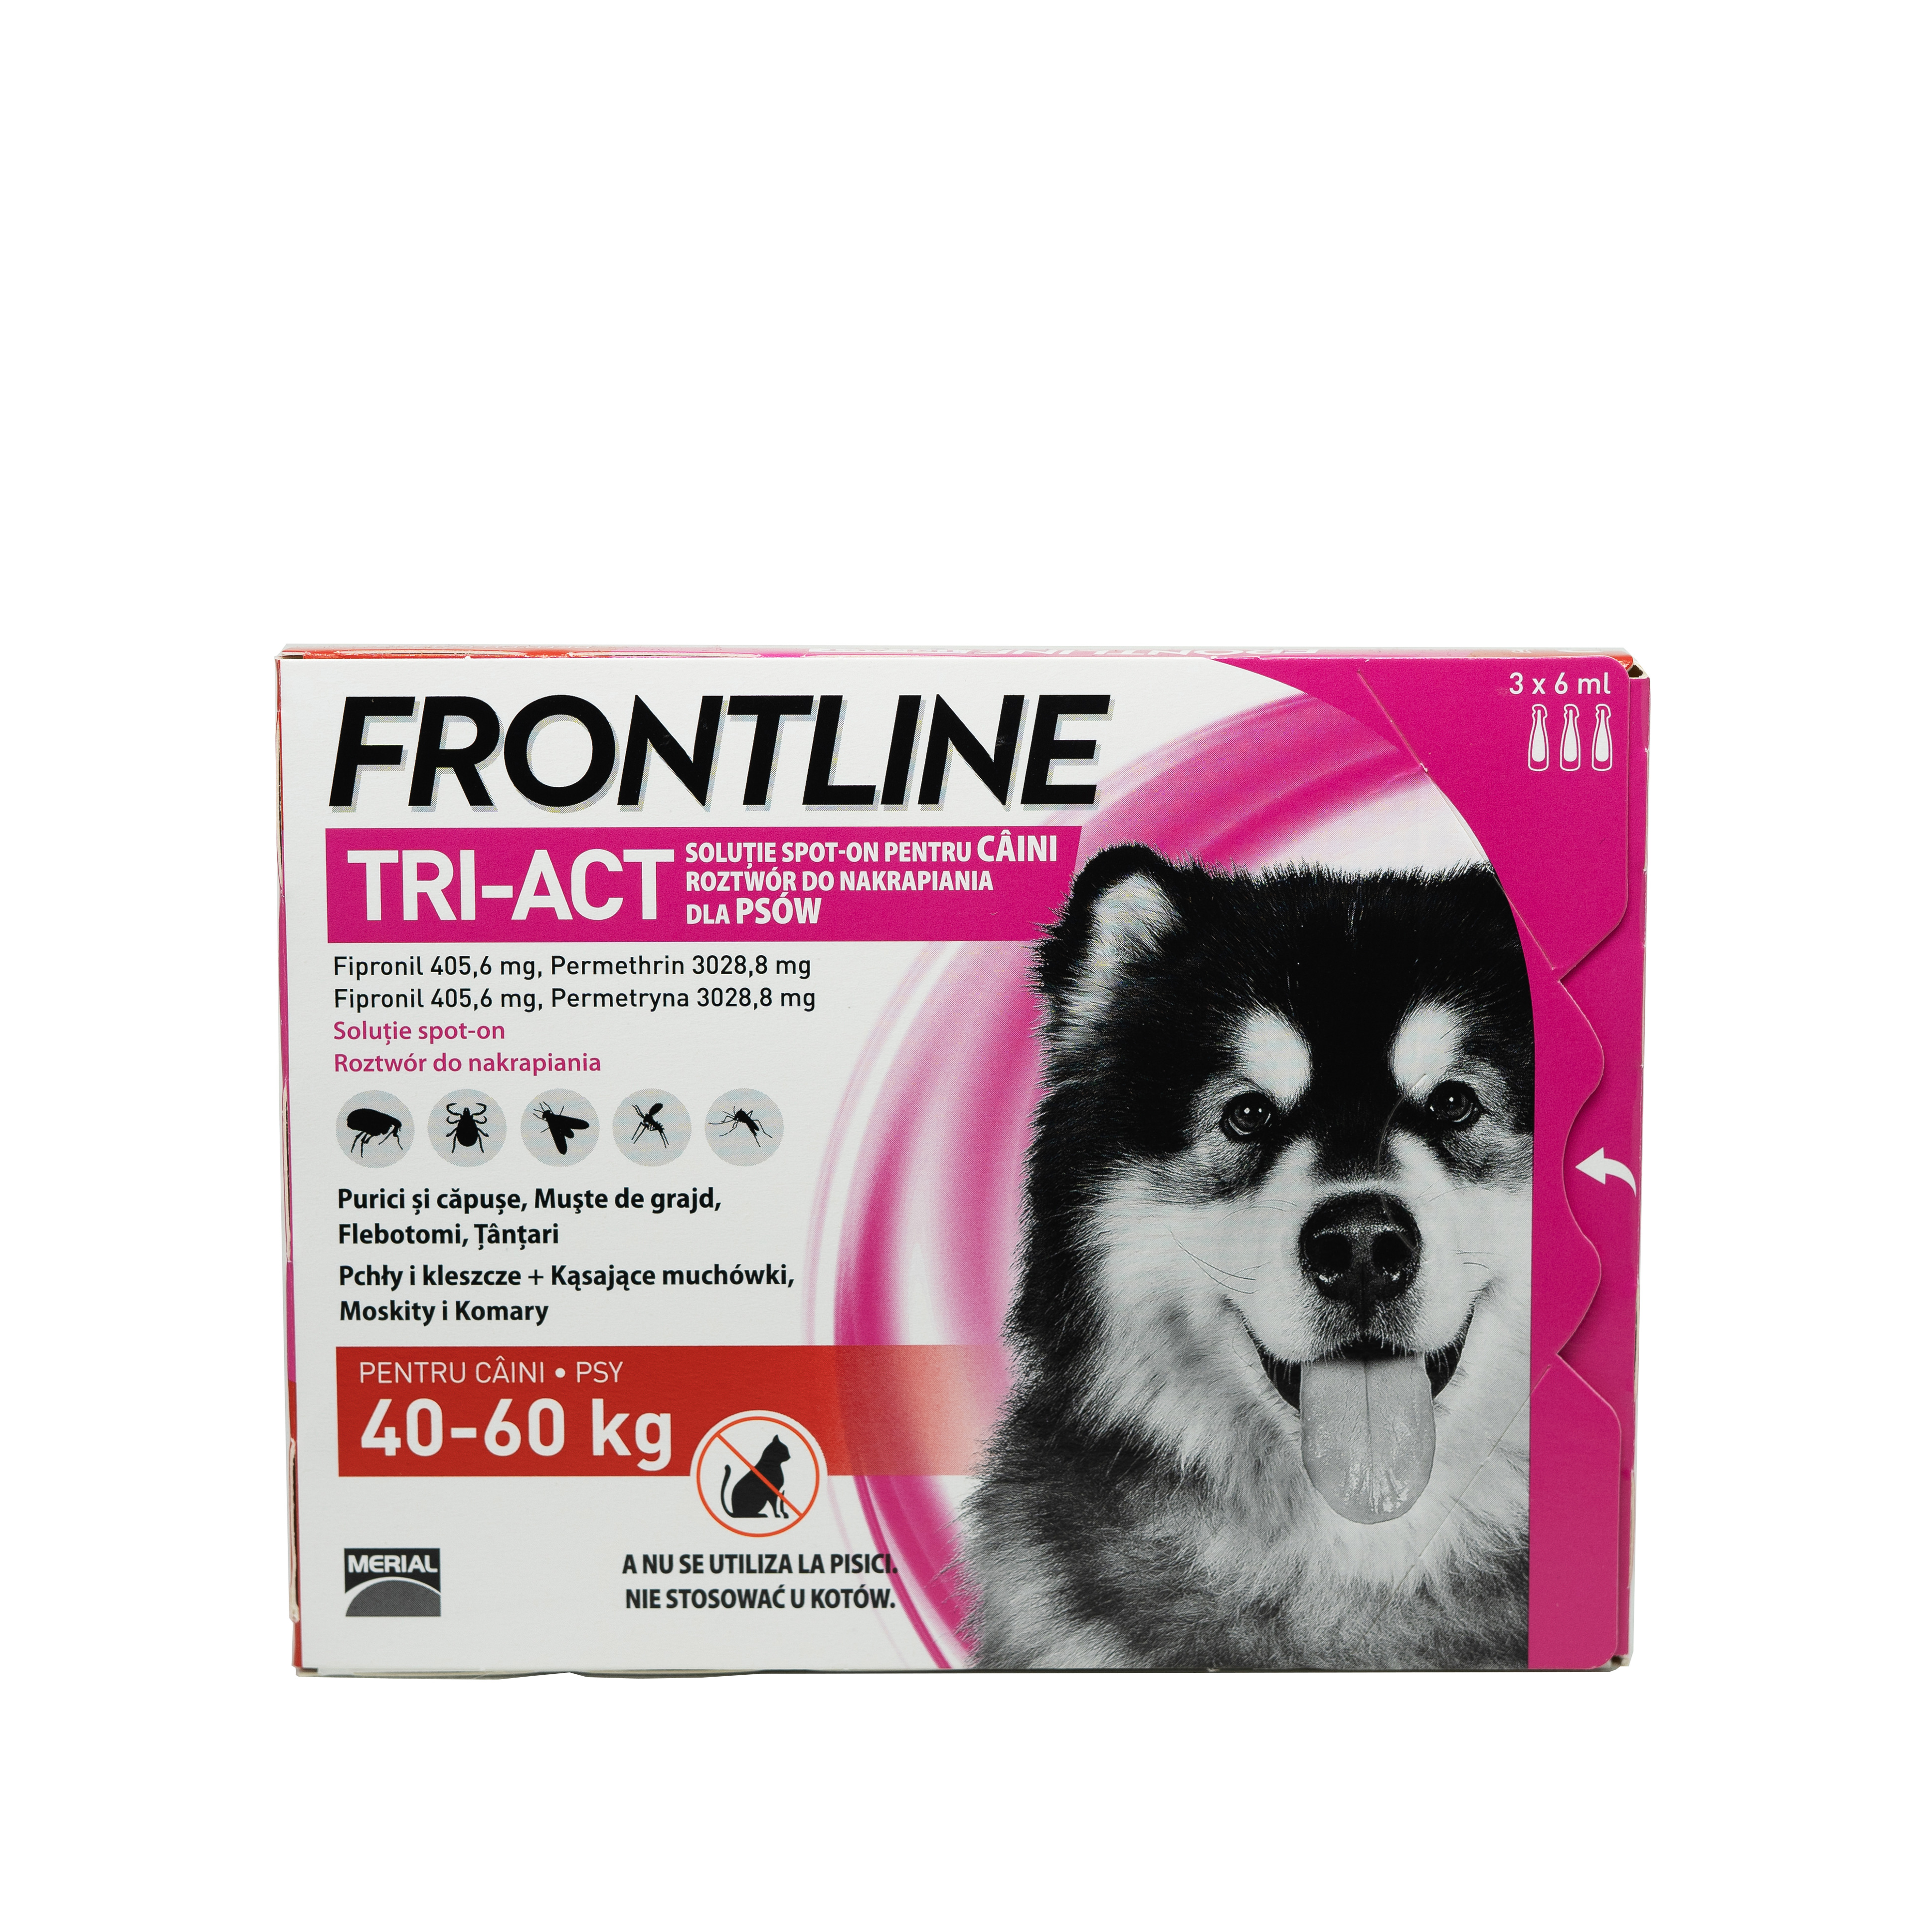 Frontline Tri-Act pentru caini de talie foarte mare 40-60kg, 3 pipete antiparazitare Merial